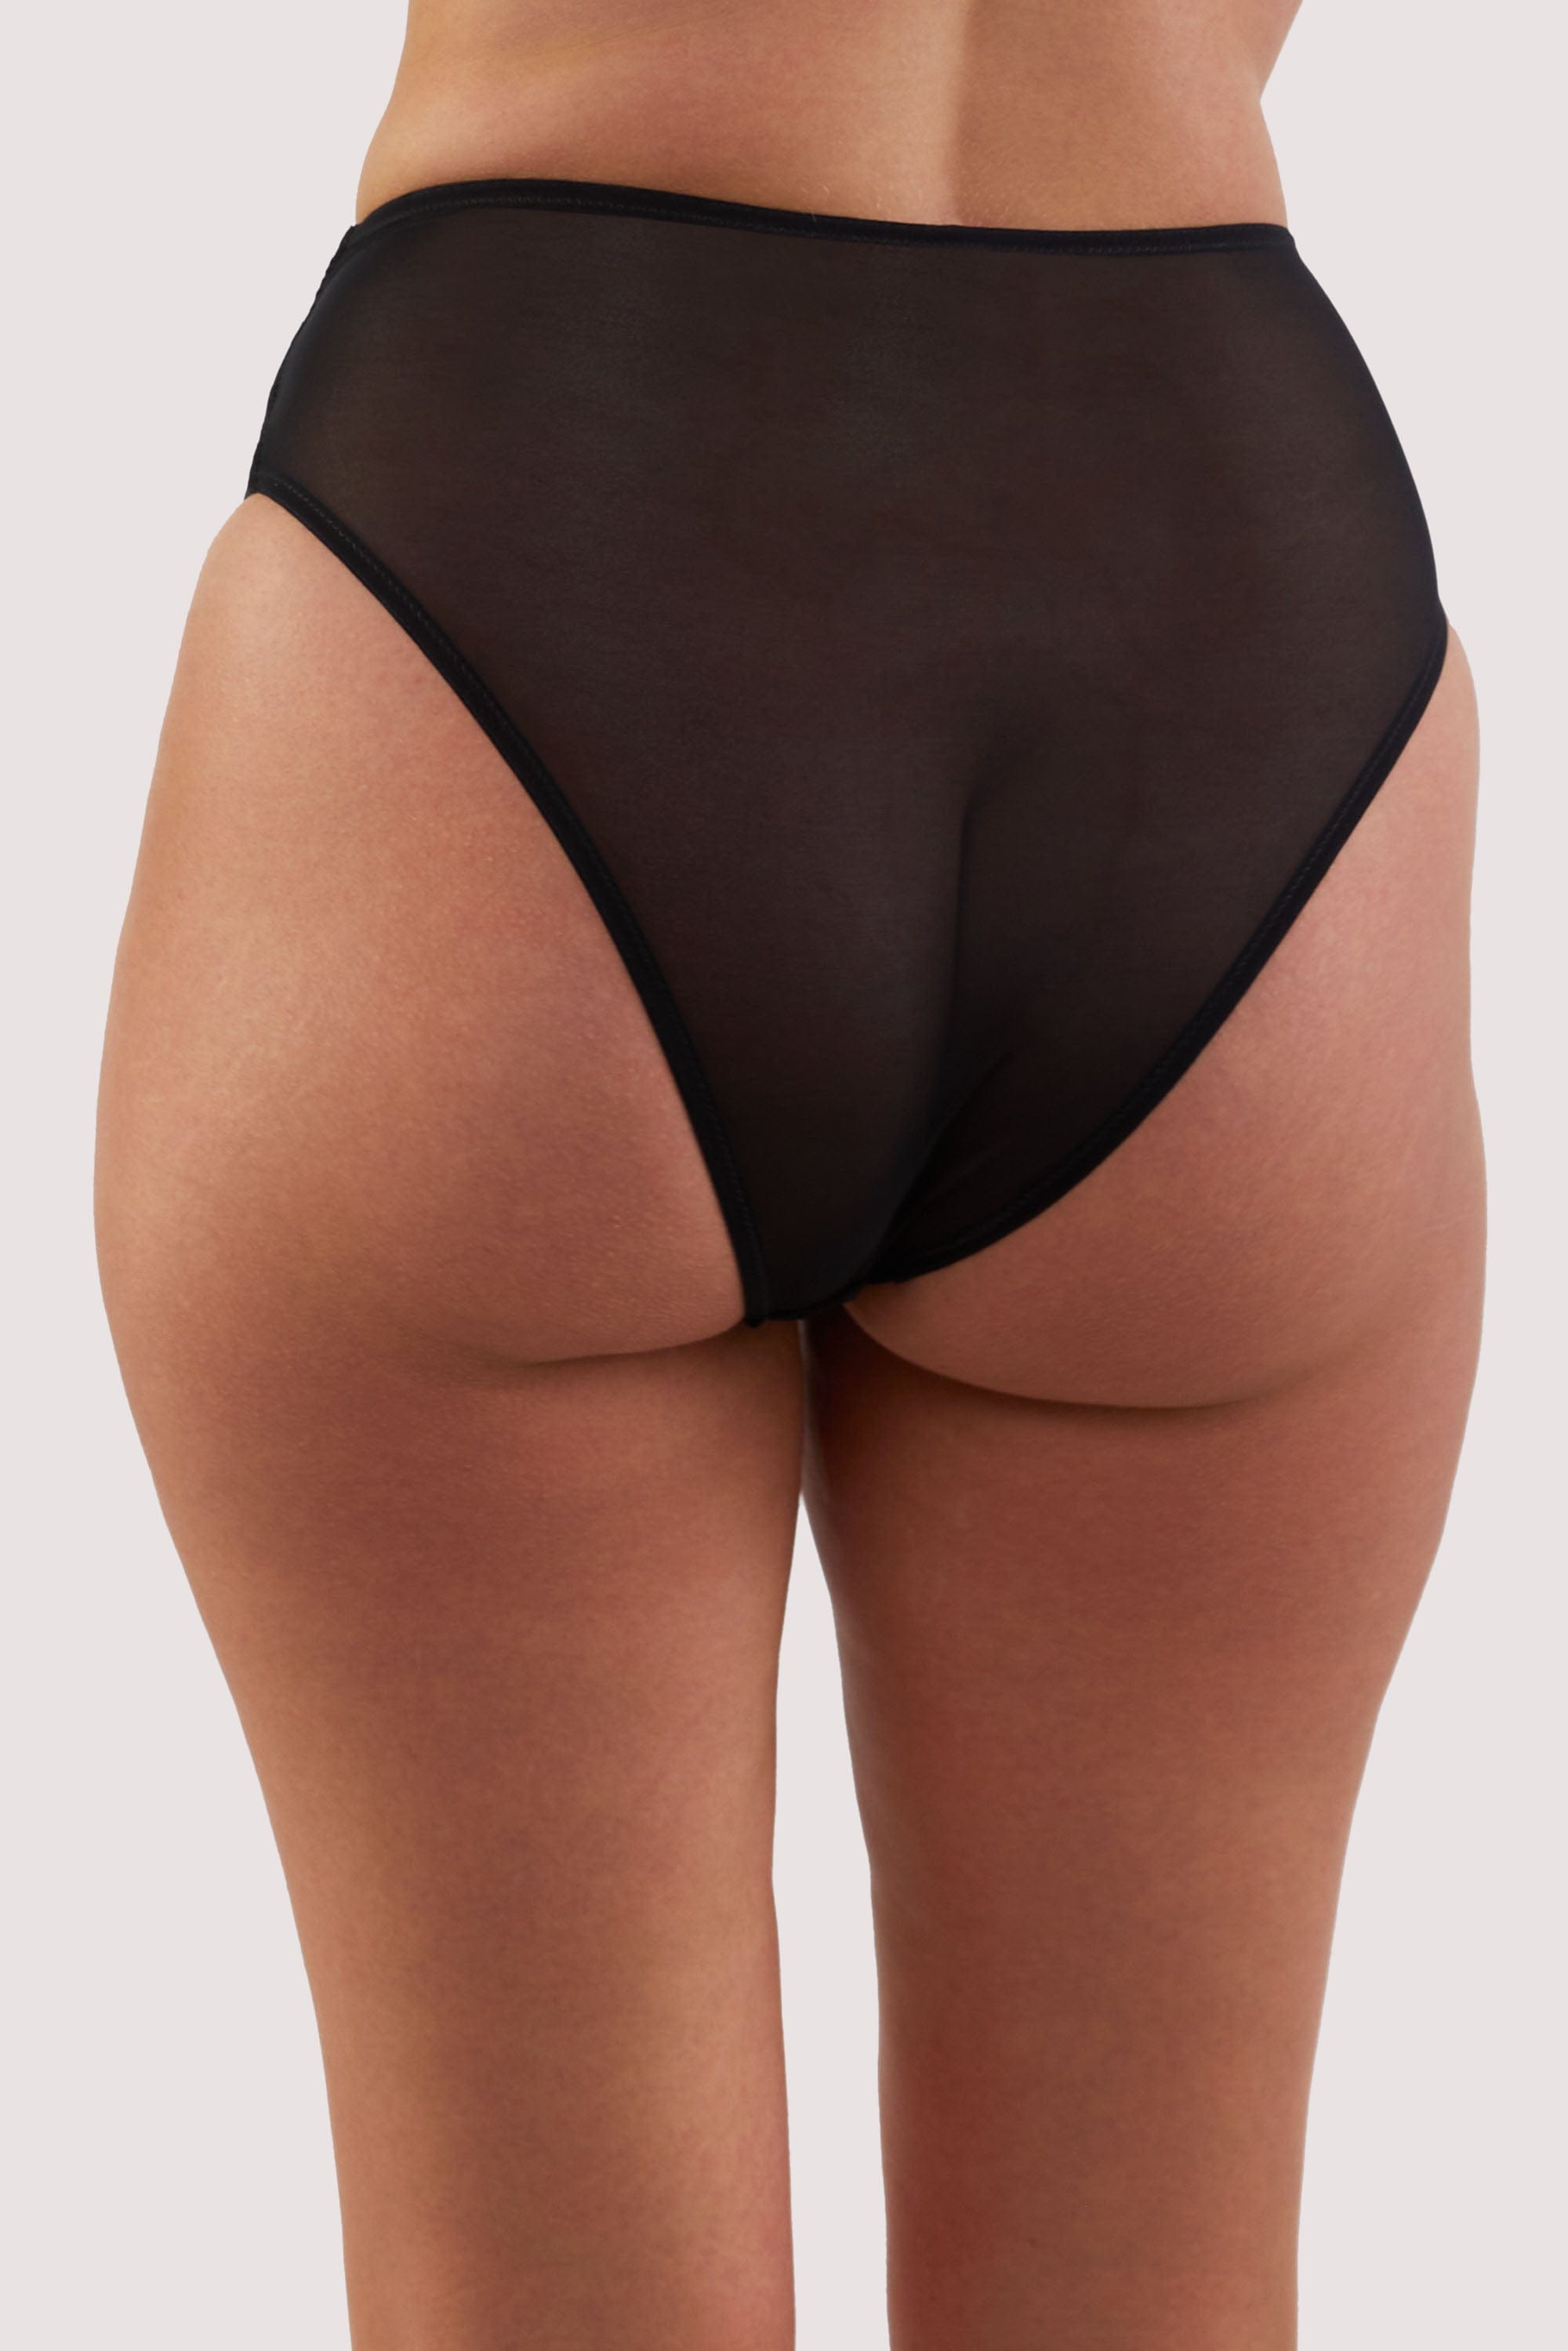 model shows black sheer mesh back of high-waisted briefs